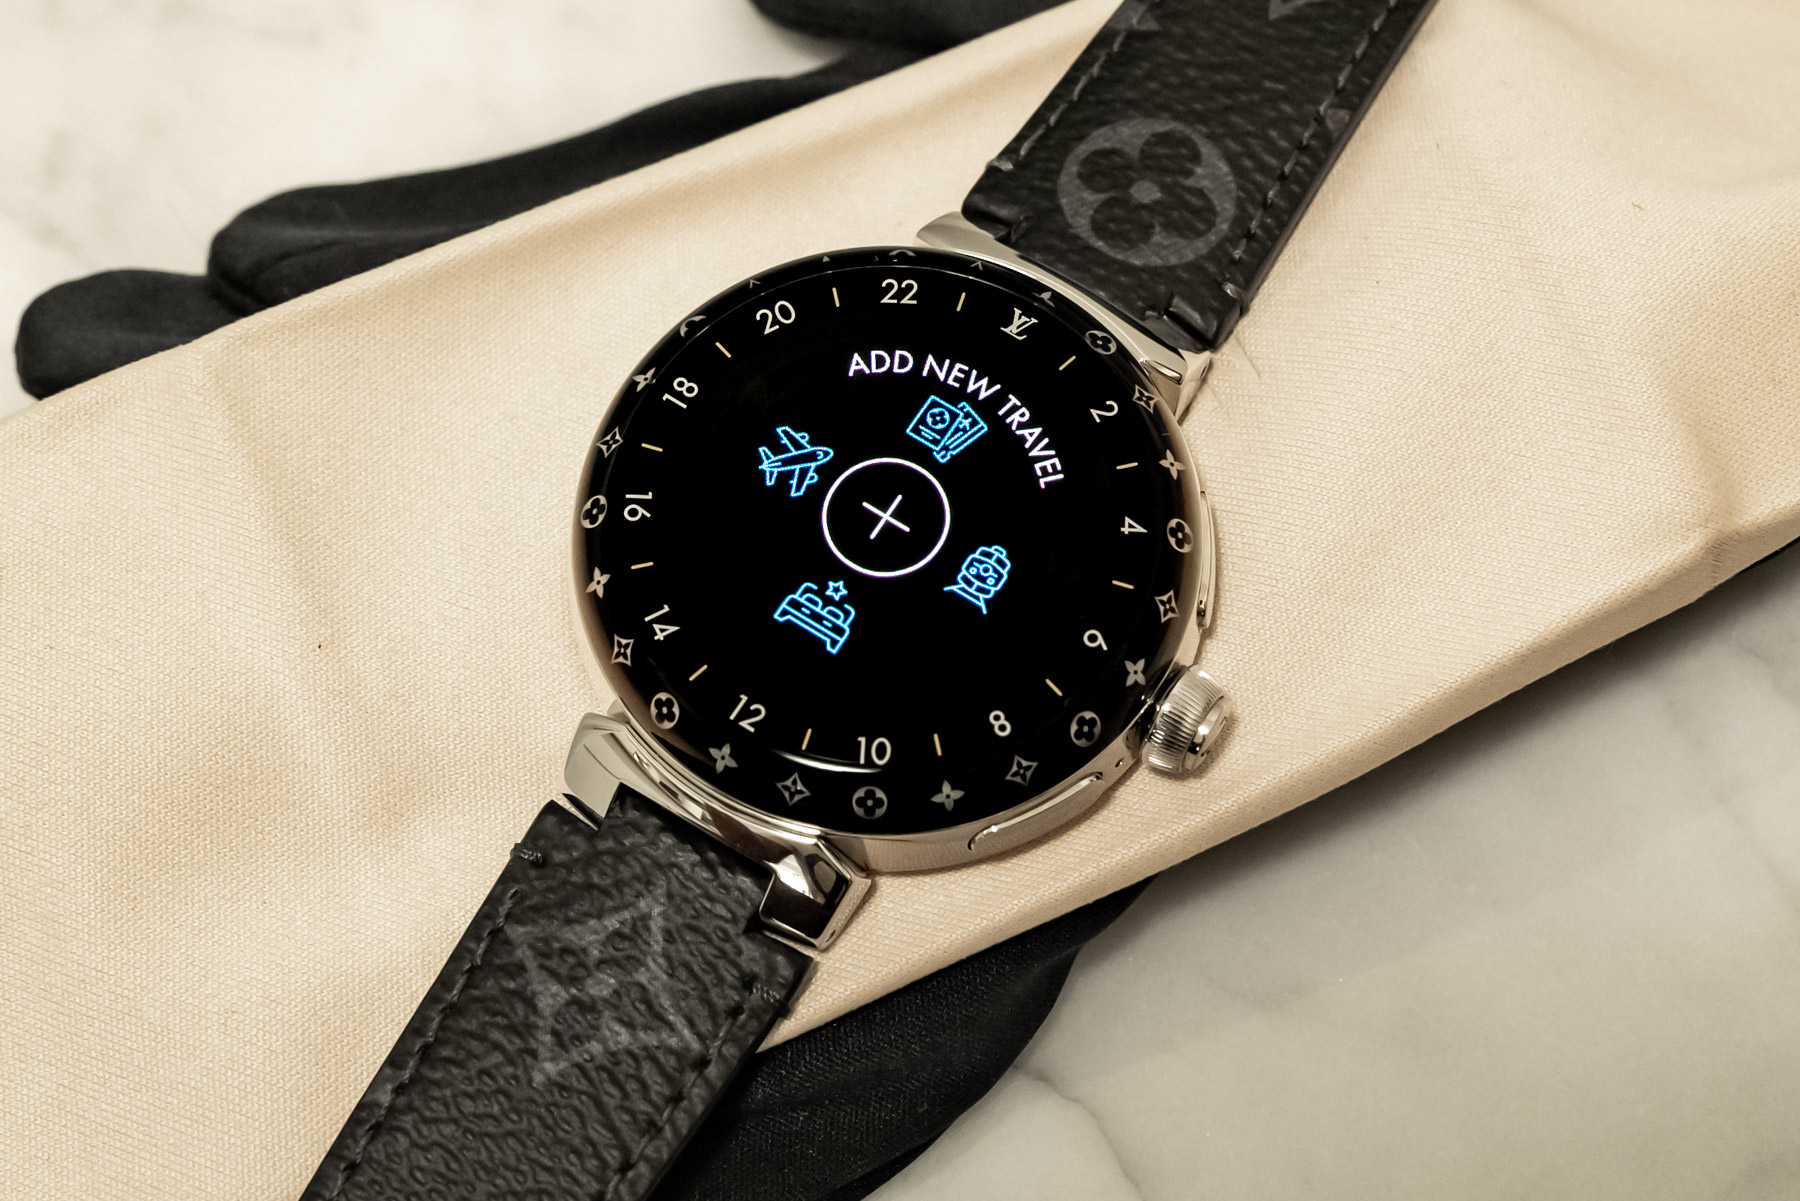 This is Louis Vuittons 3rdgen smartwatch priced from 3400  revü